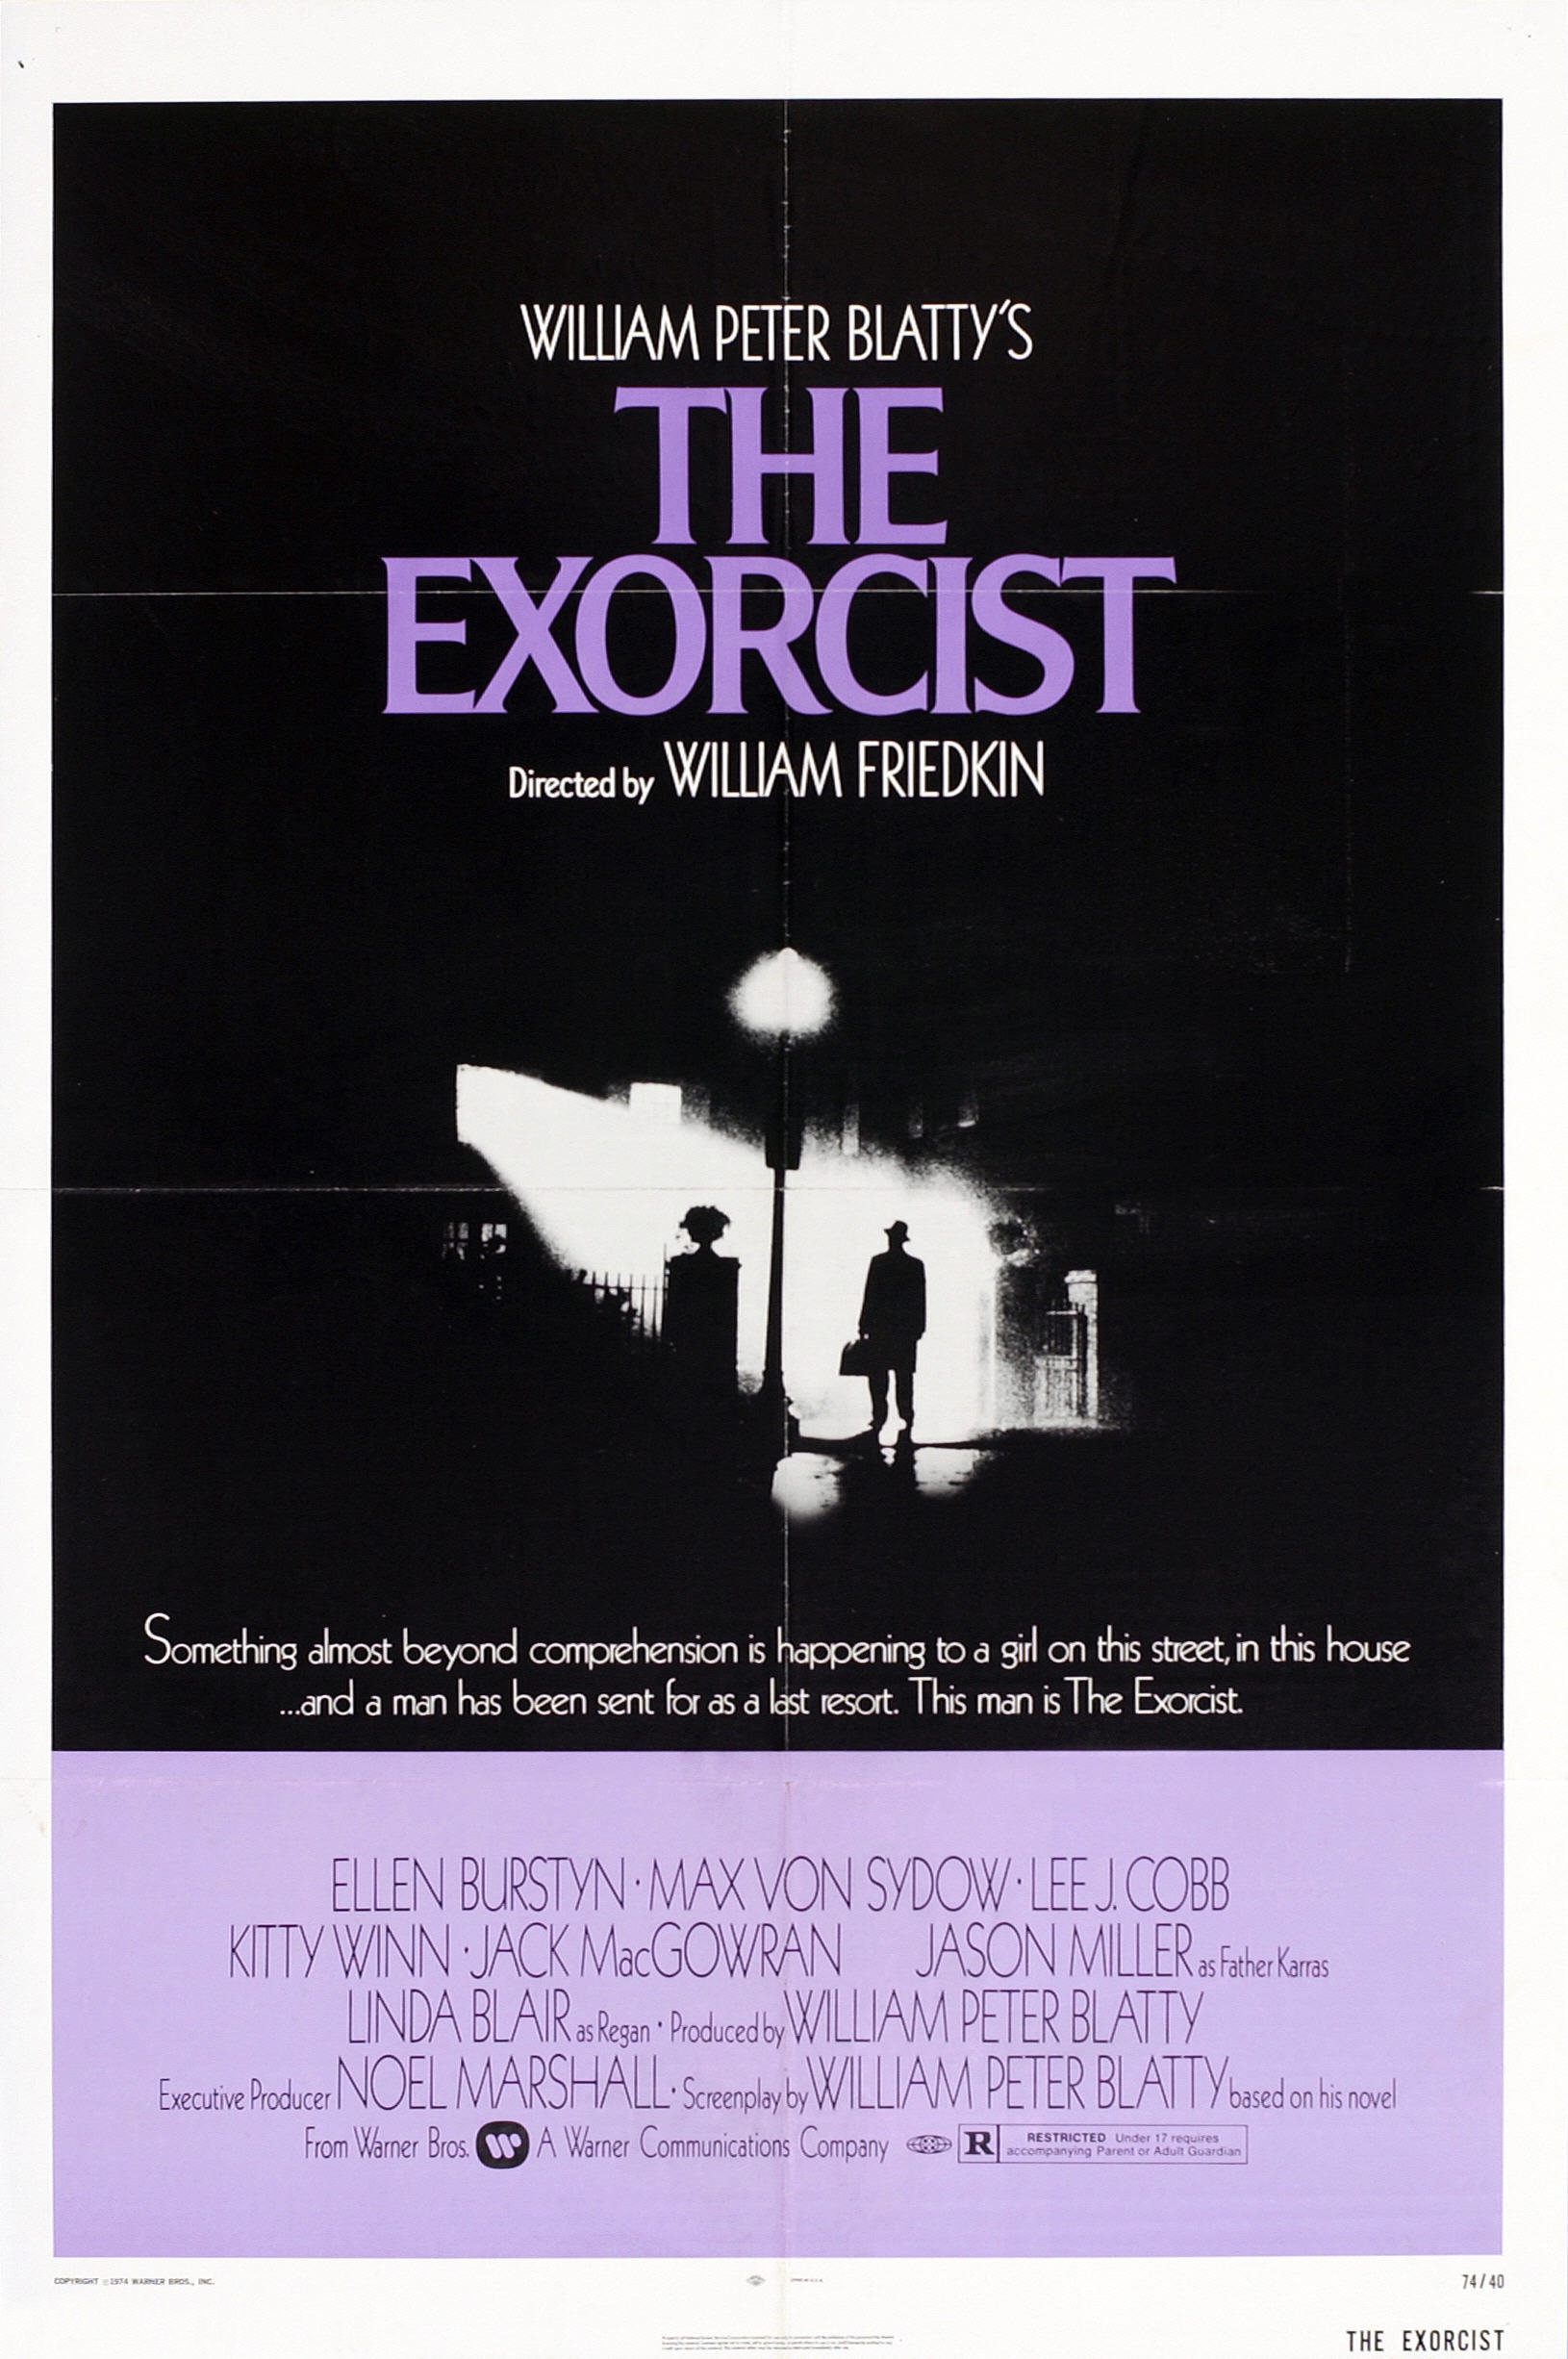 The Exorcist (film), Warner Bros. Entertainment Wiki